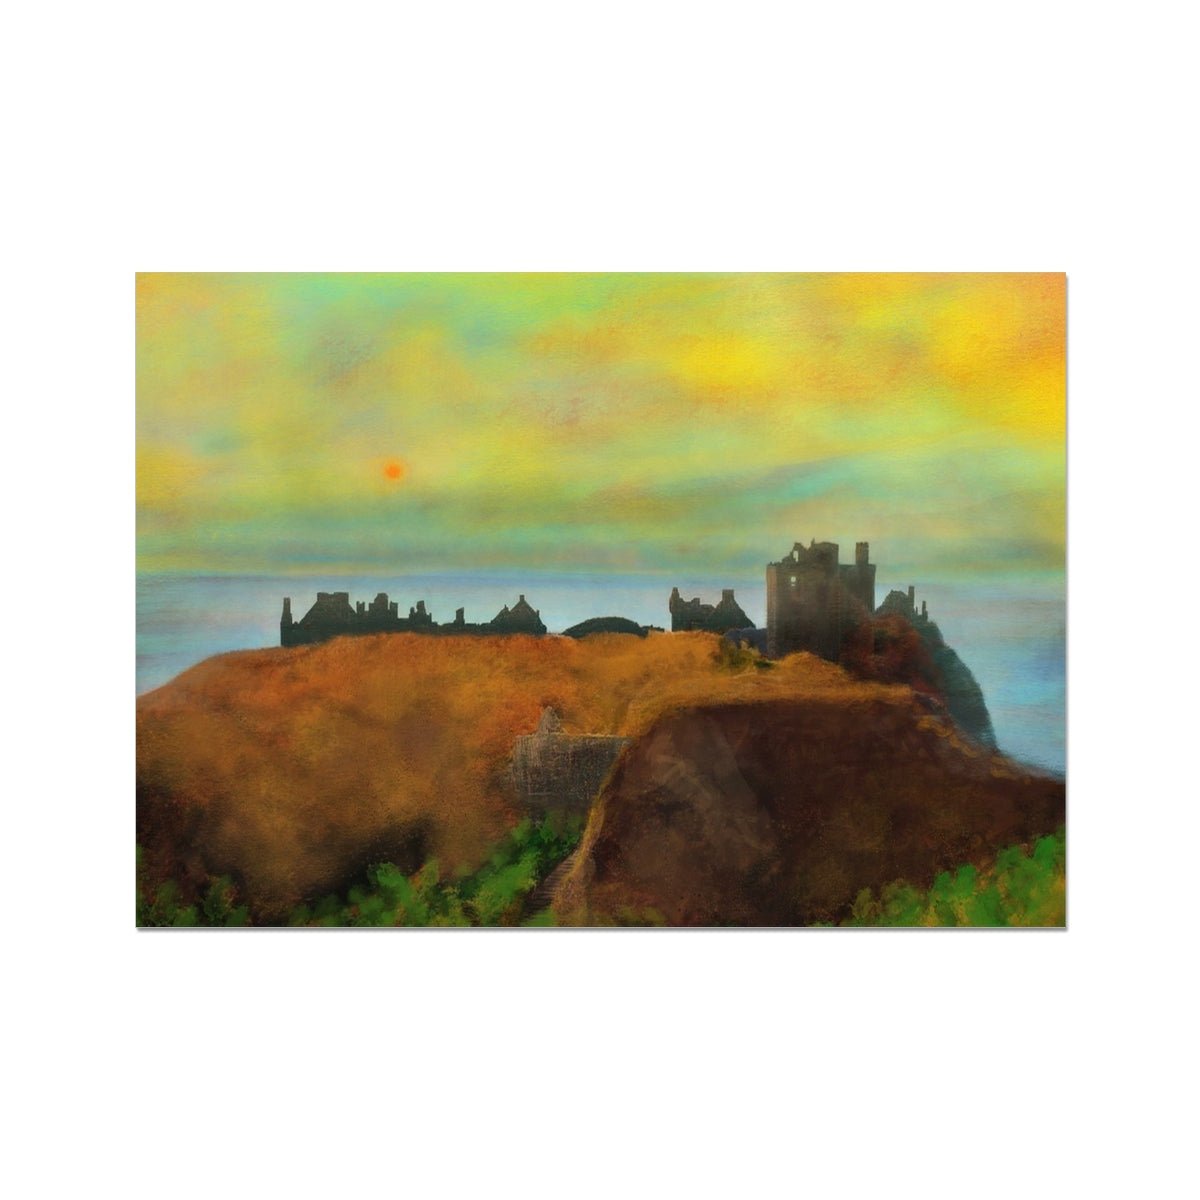 Dunnottar Castle Dusk Painting | Fine Art Prints From Scotland-Unframed Prints-Scottish Castles Art Gallery-A2 Landscape-Paintings, Prints, Homeware, Art Gifts From Scotland By Scottish Artist Kevin Hunter